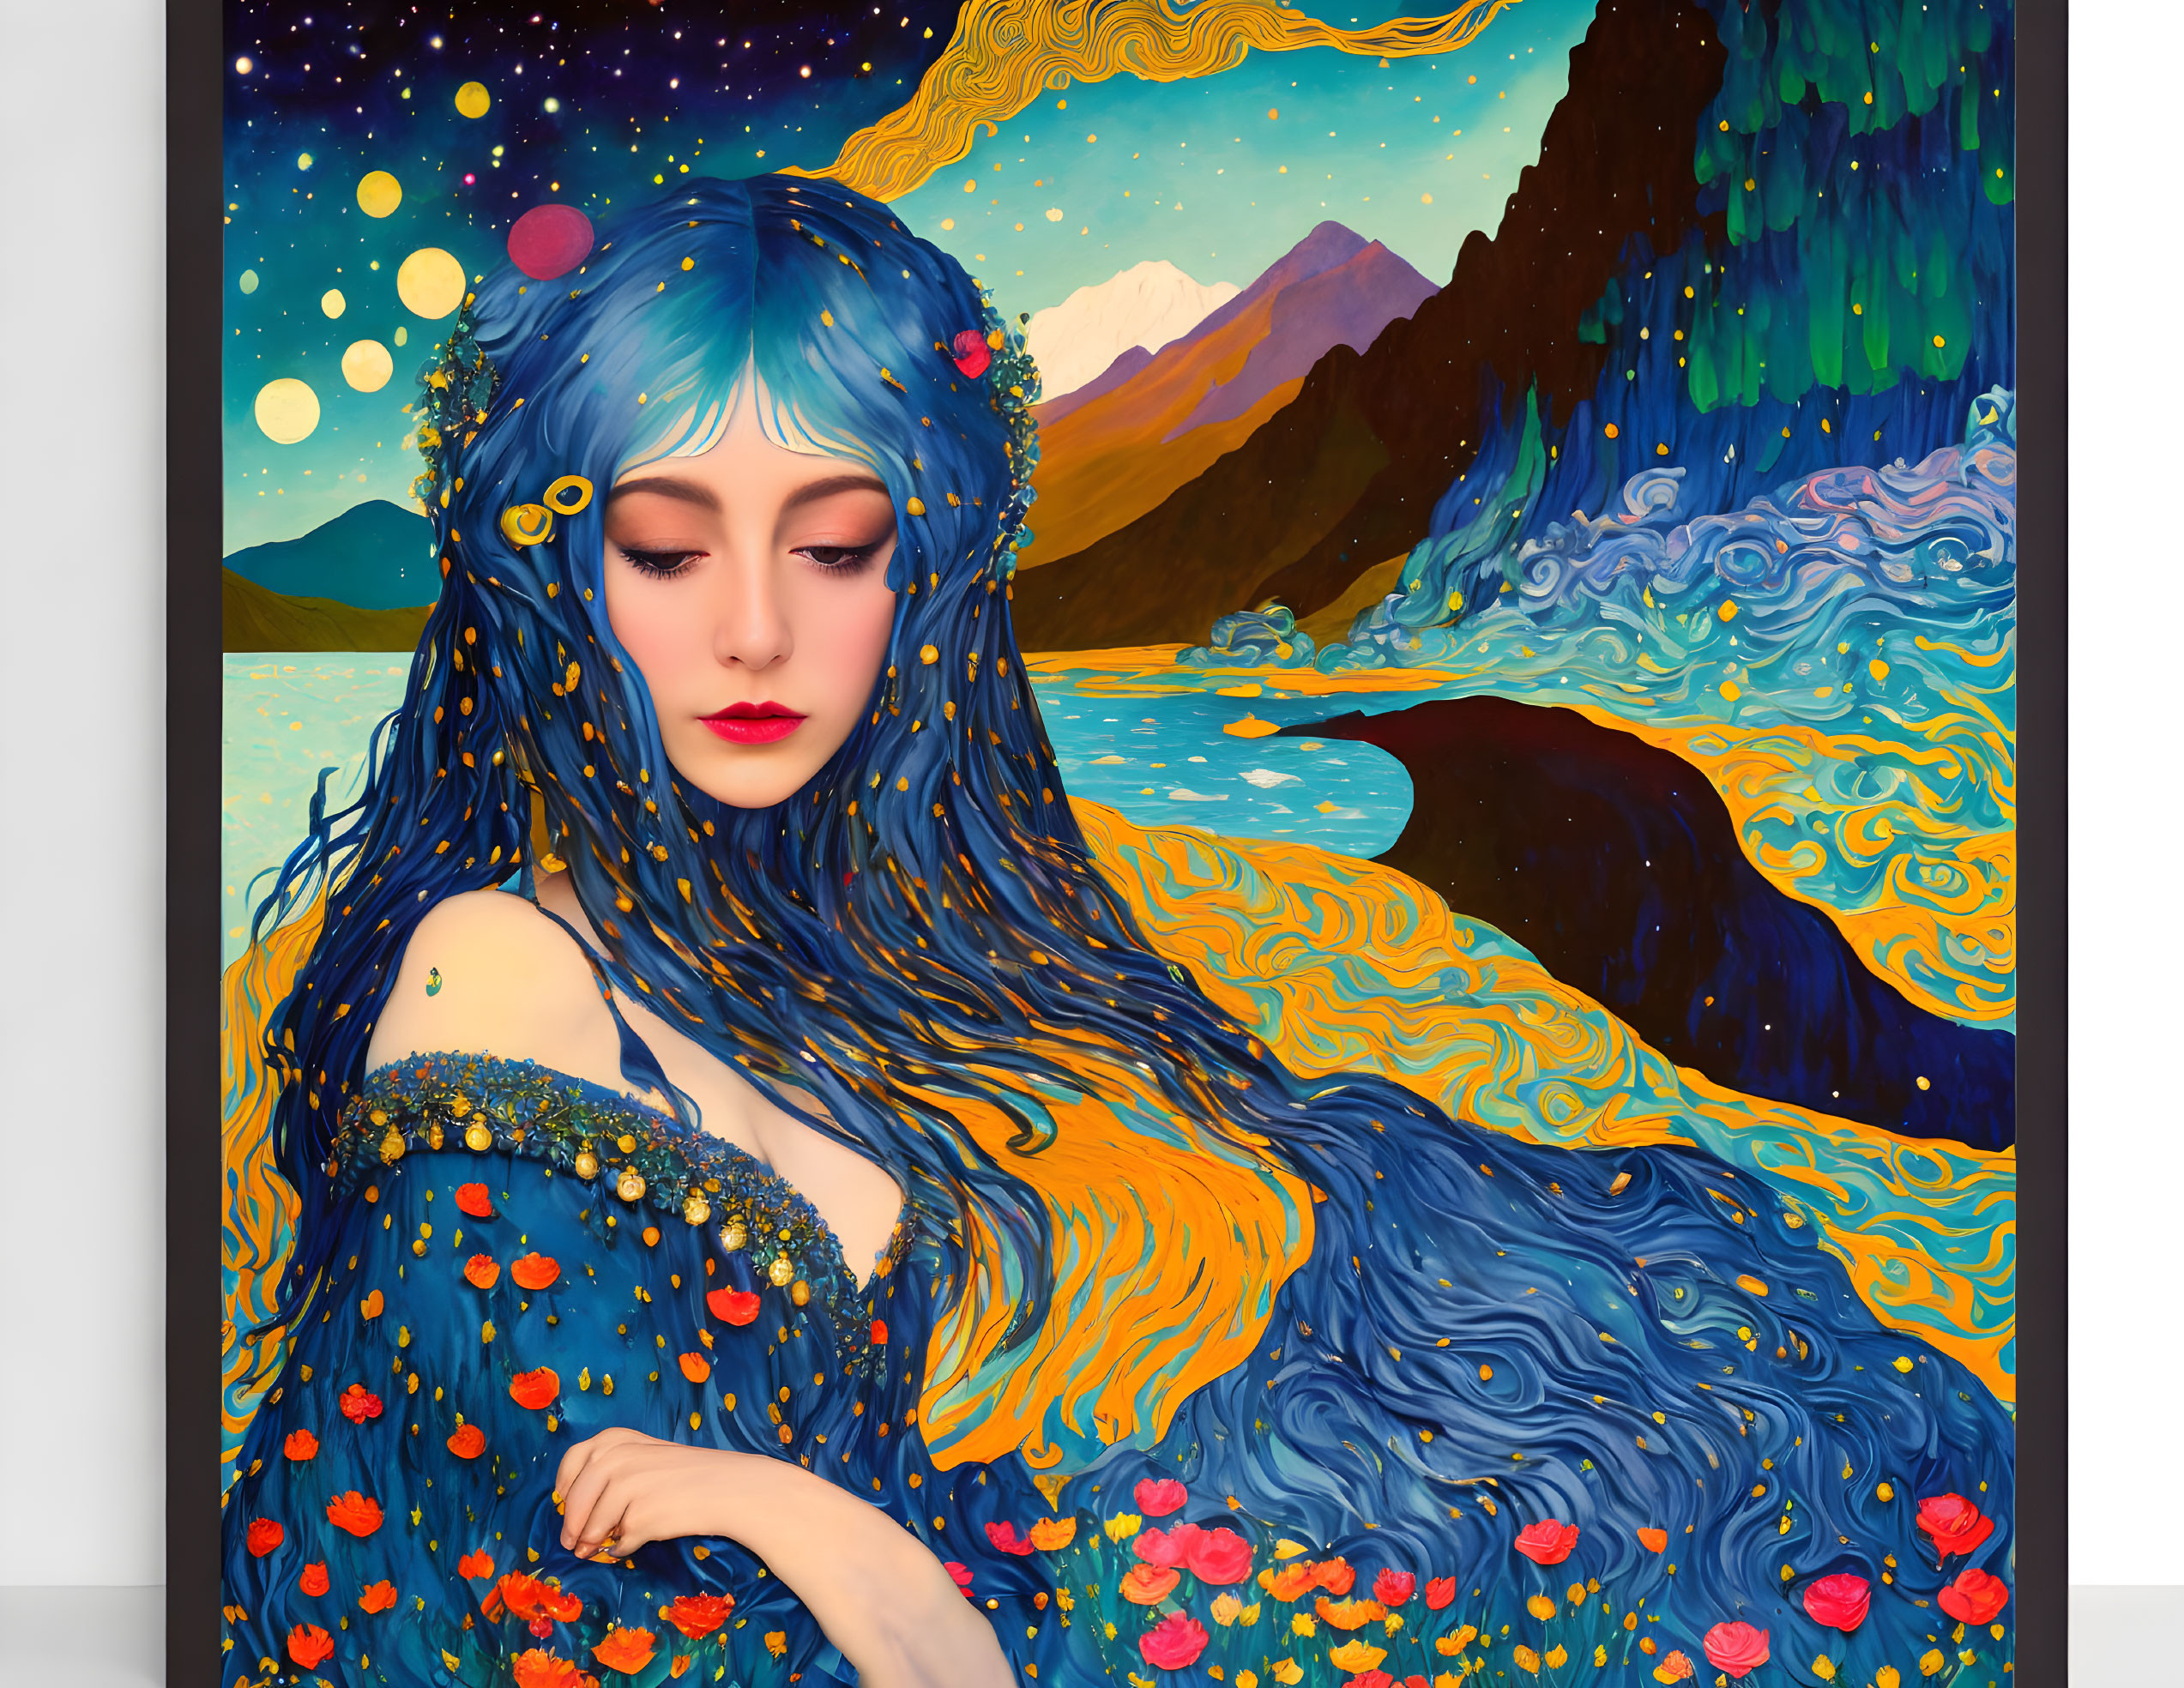 Blue-haired woman blending into Van Gogh-style landscape art